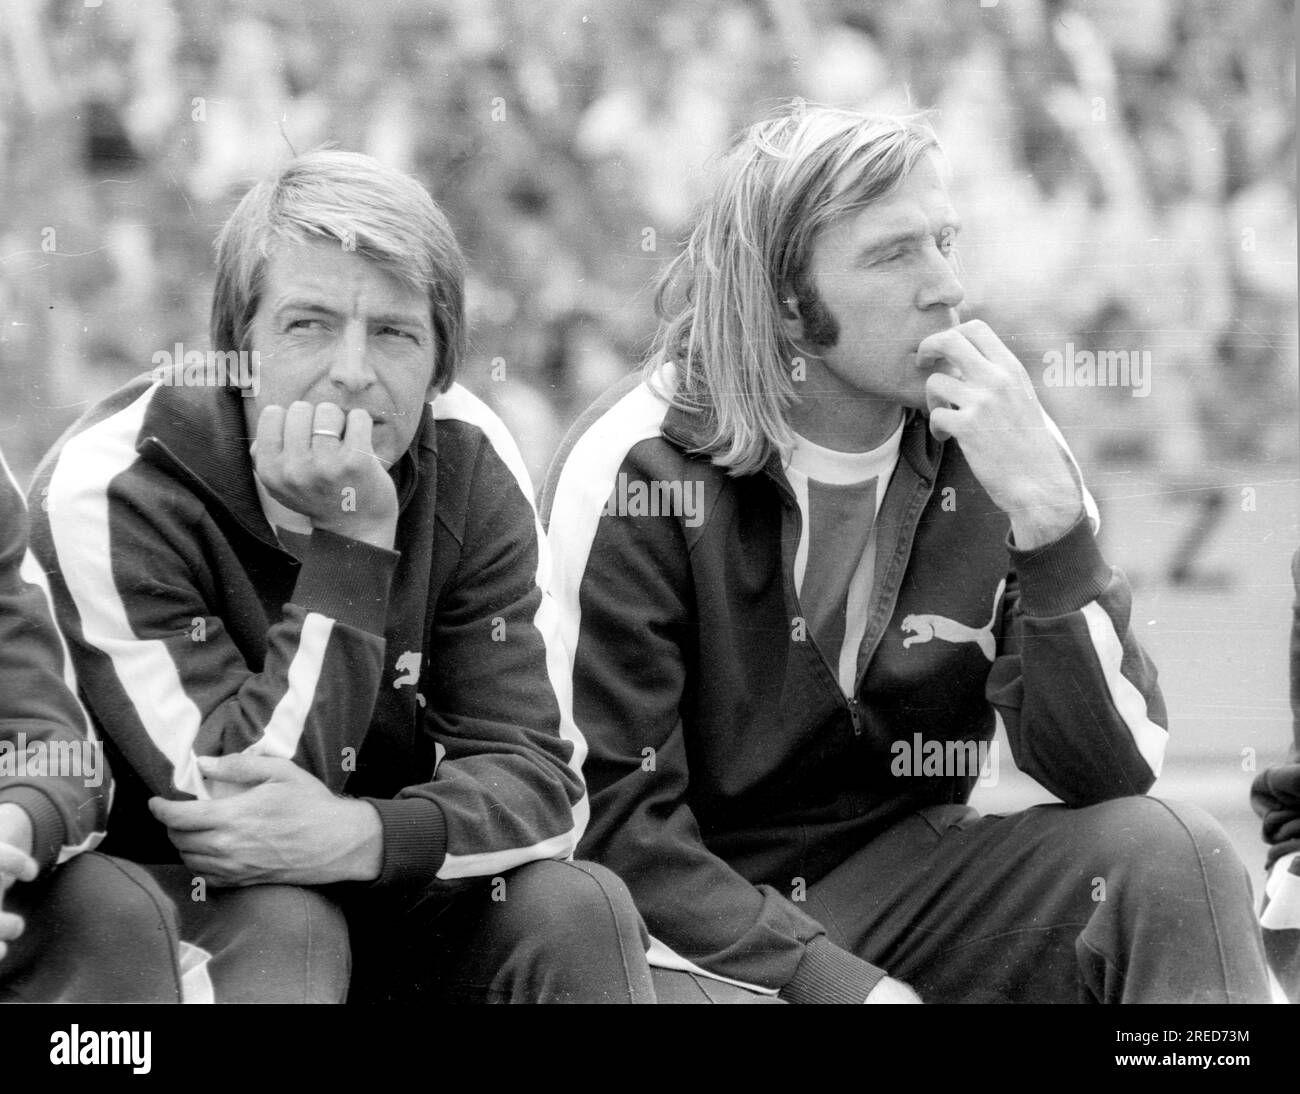 DFB Cup Final 1973: Borussia Mönchengladbach - 1. FC Köln 2:1 / Hartwig Bleidick and Günter Netzer (both Borussia) pensive on the bench [automated translation] Stock Photo